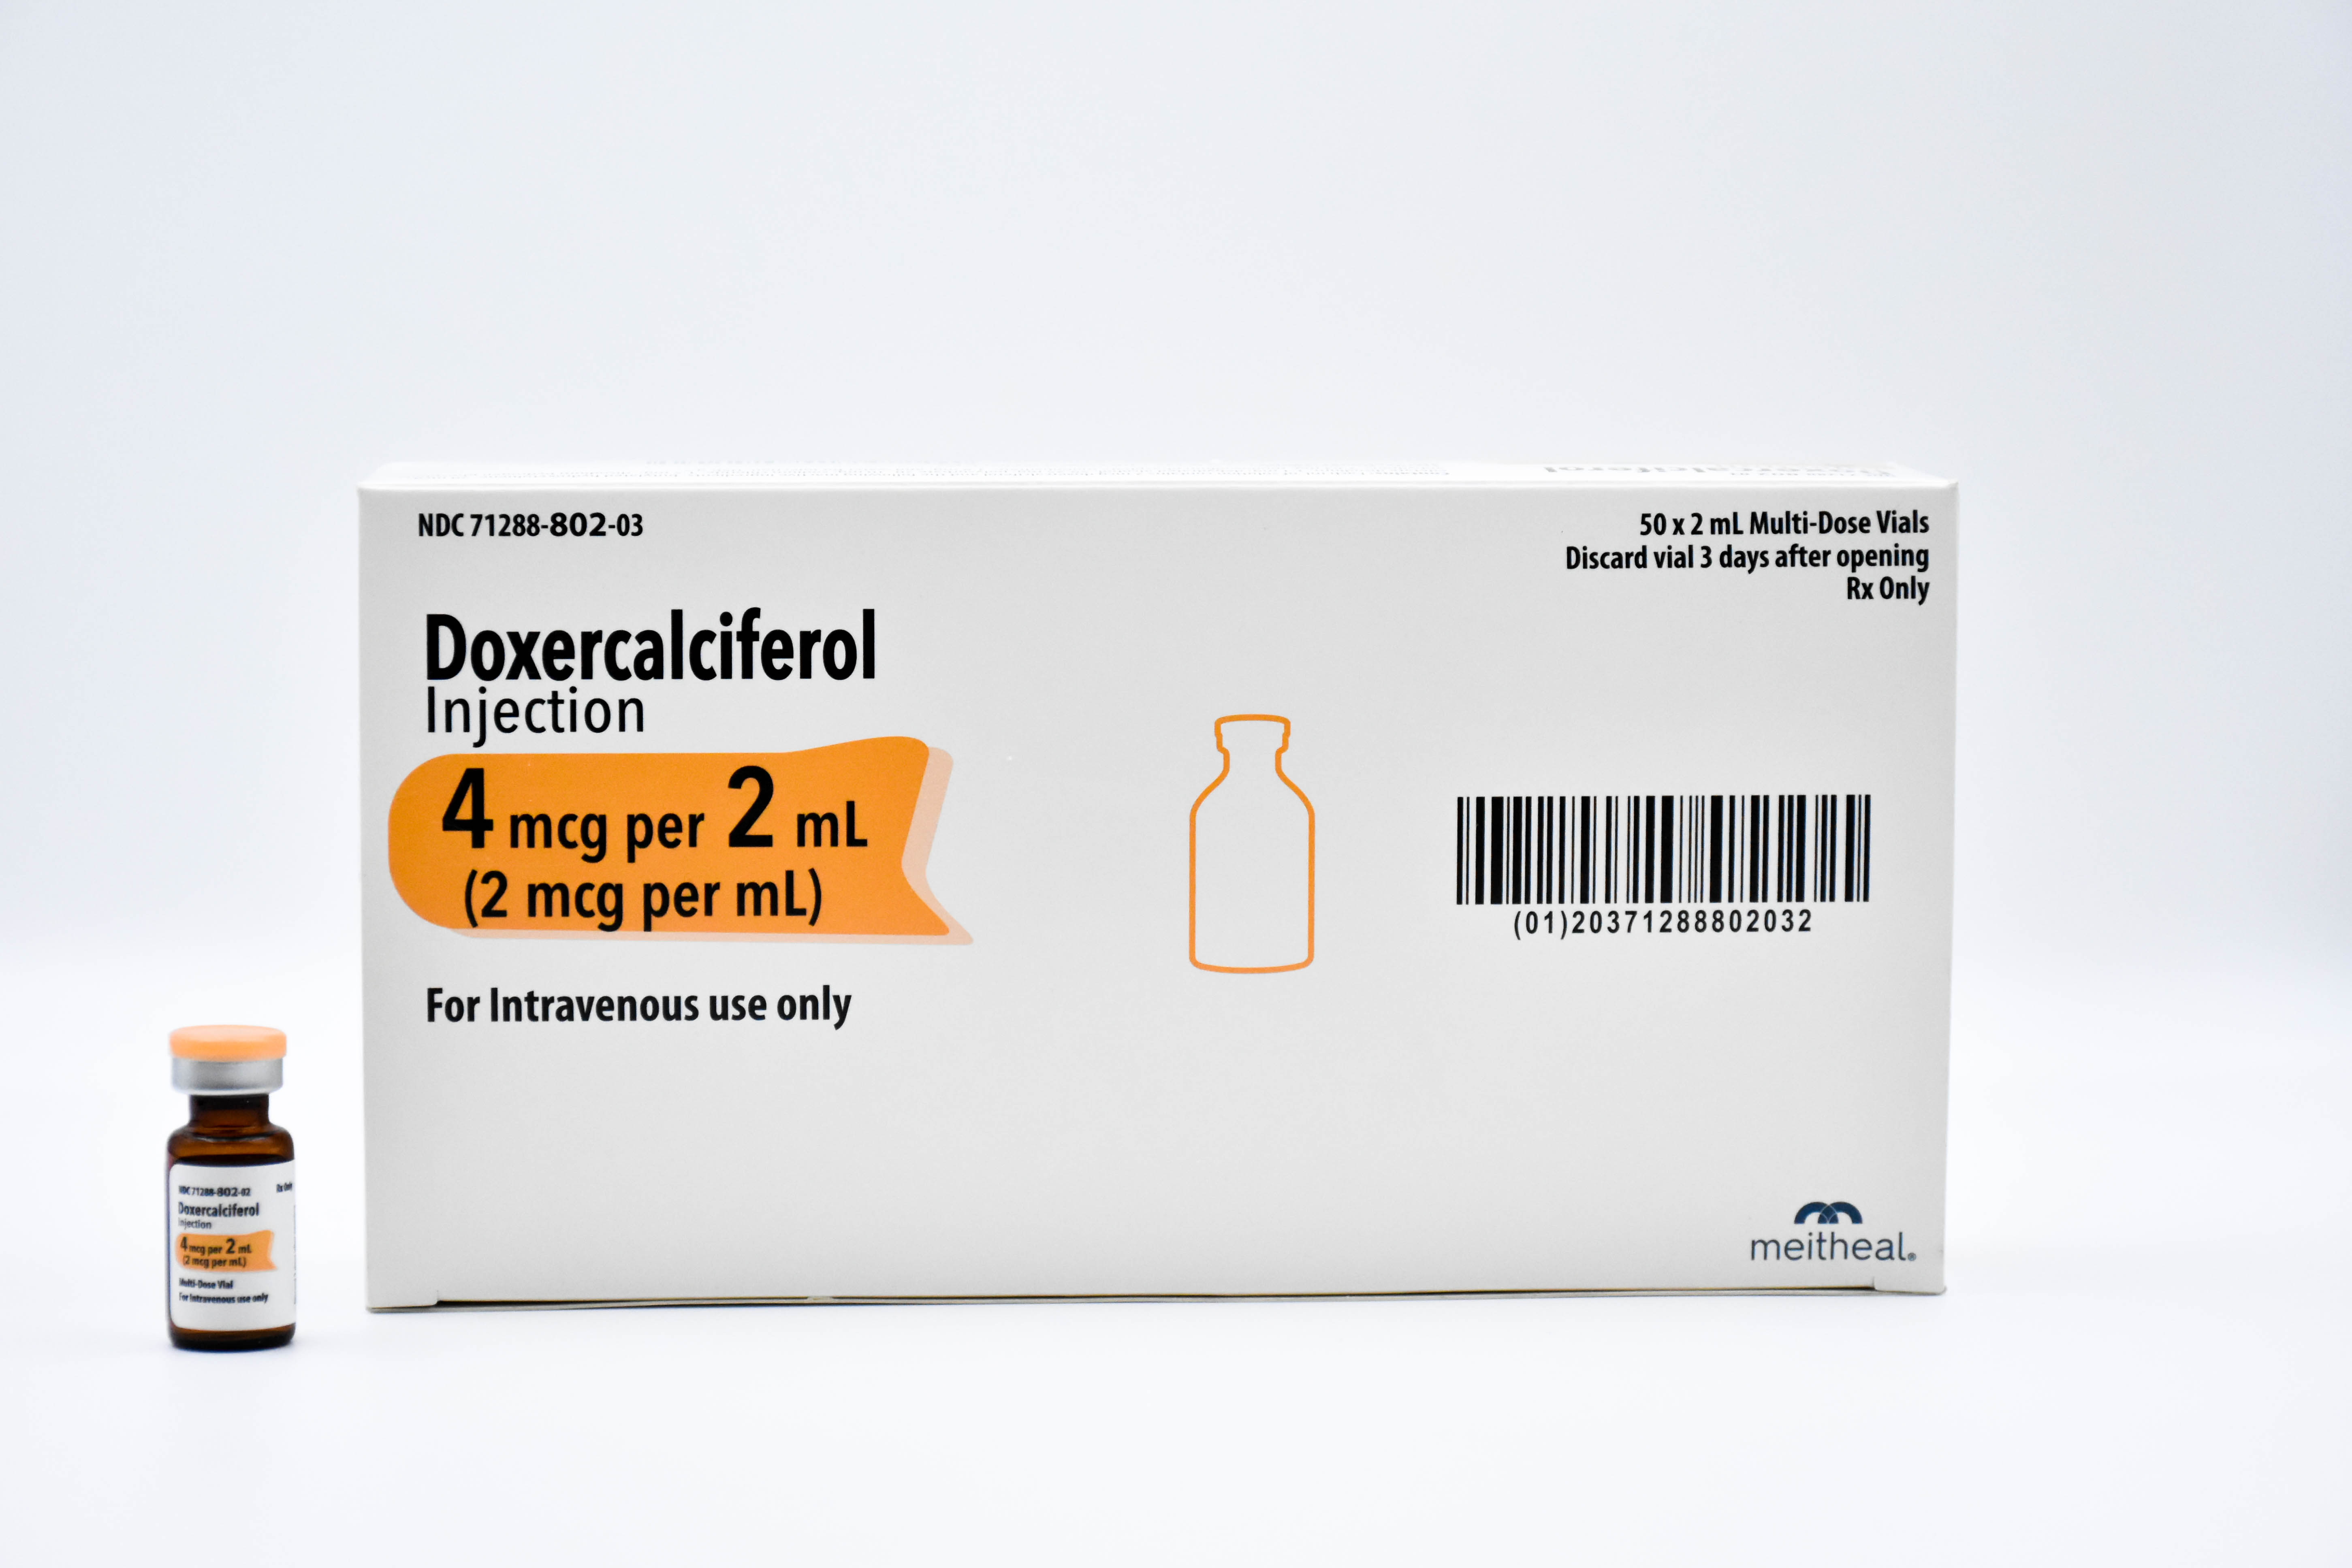 Doxercalciferol Injection